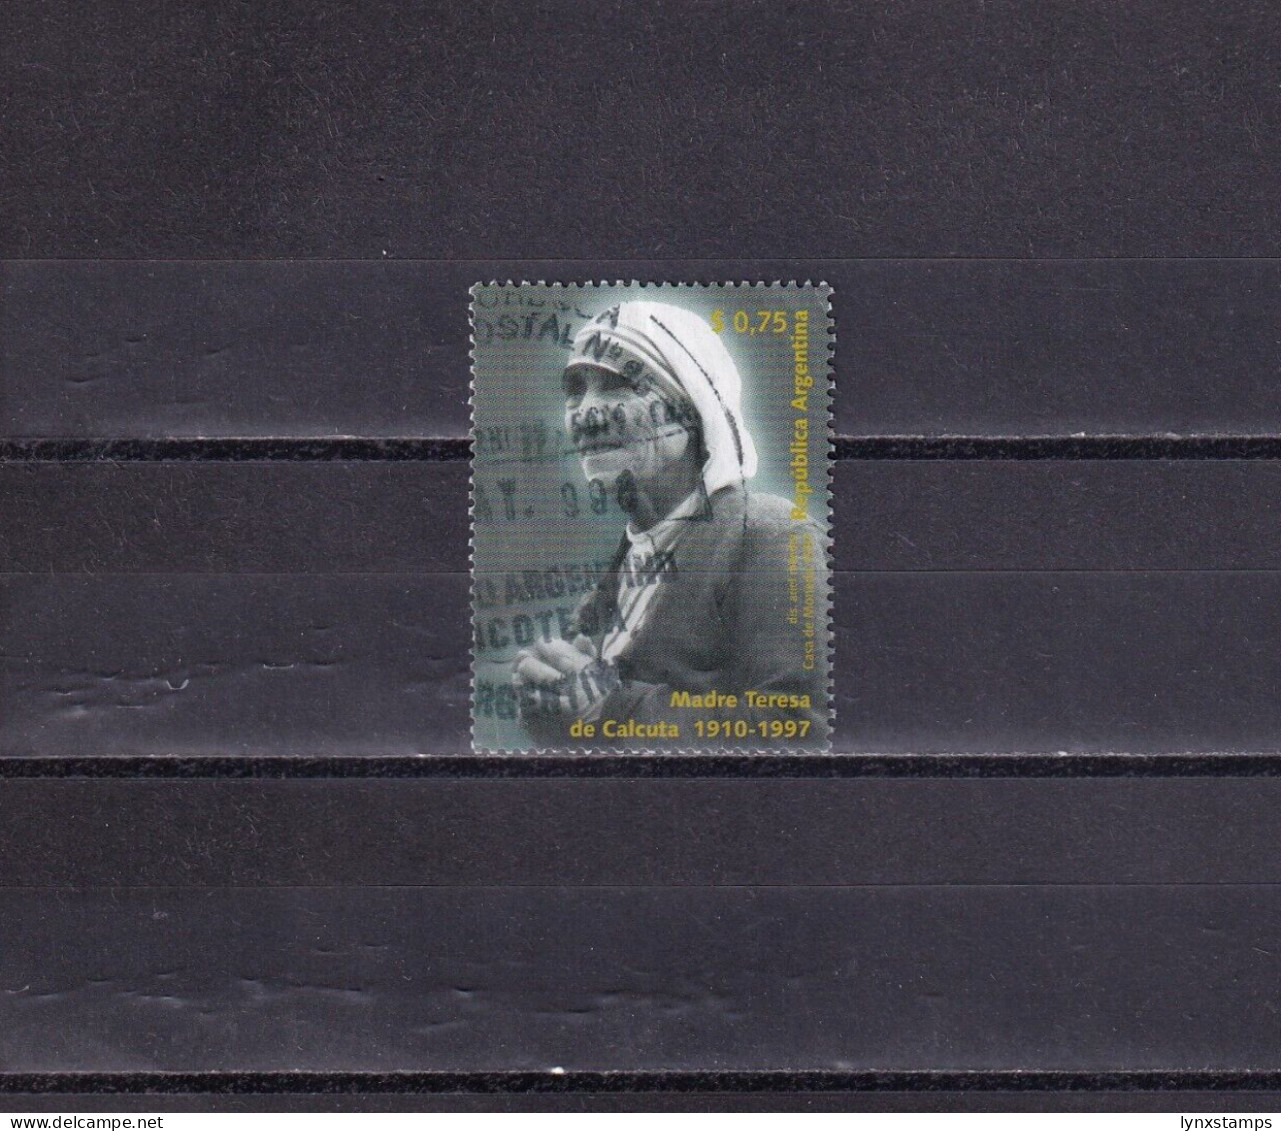 SA04 Argentina 1997 Mother Teresa Commemoration Used Stamp - Nuevos